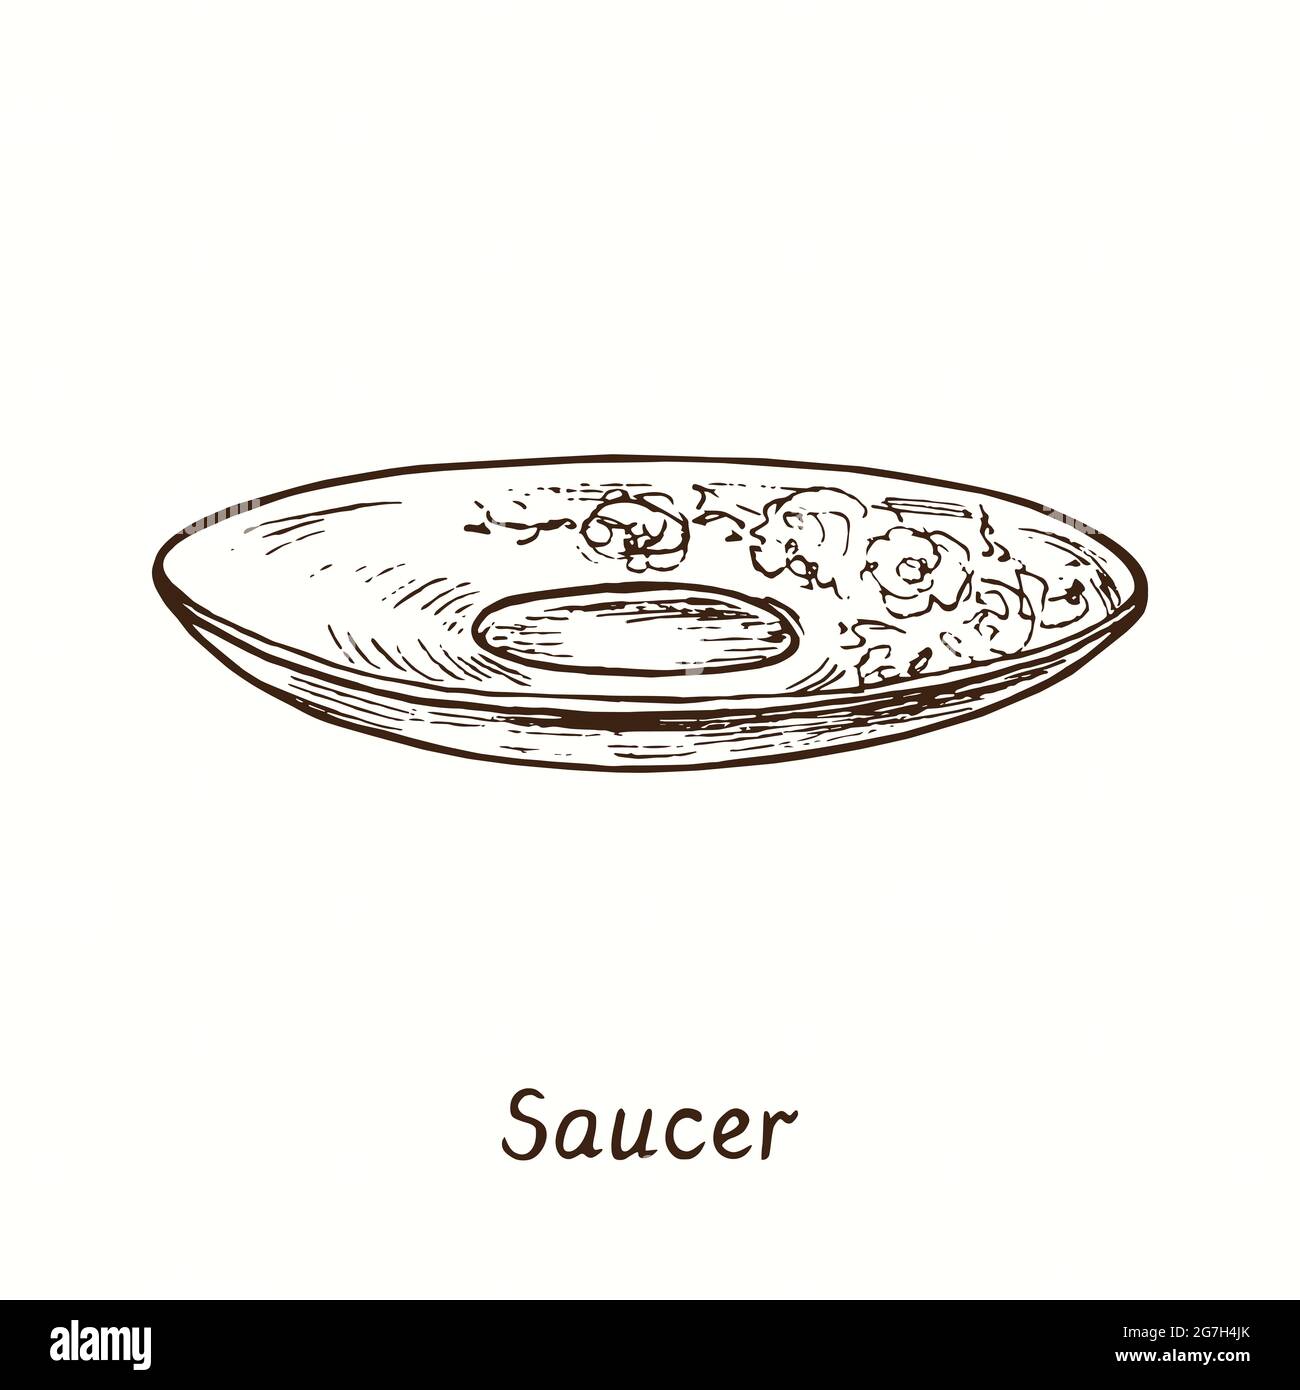 saucer outline